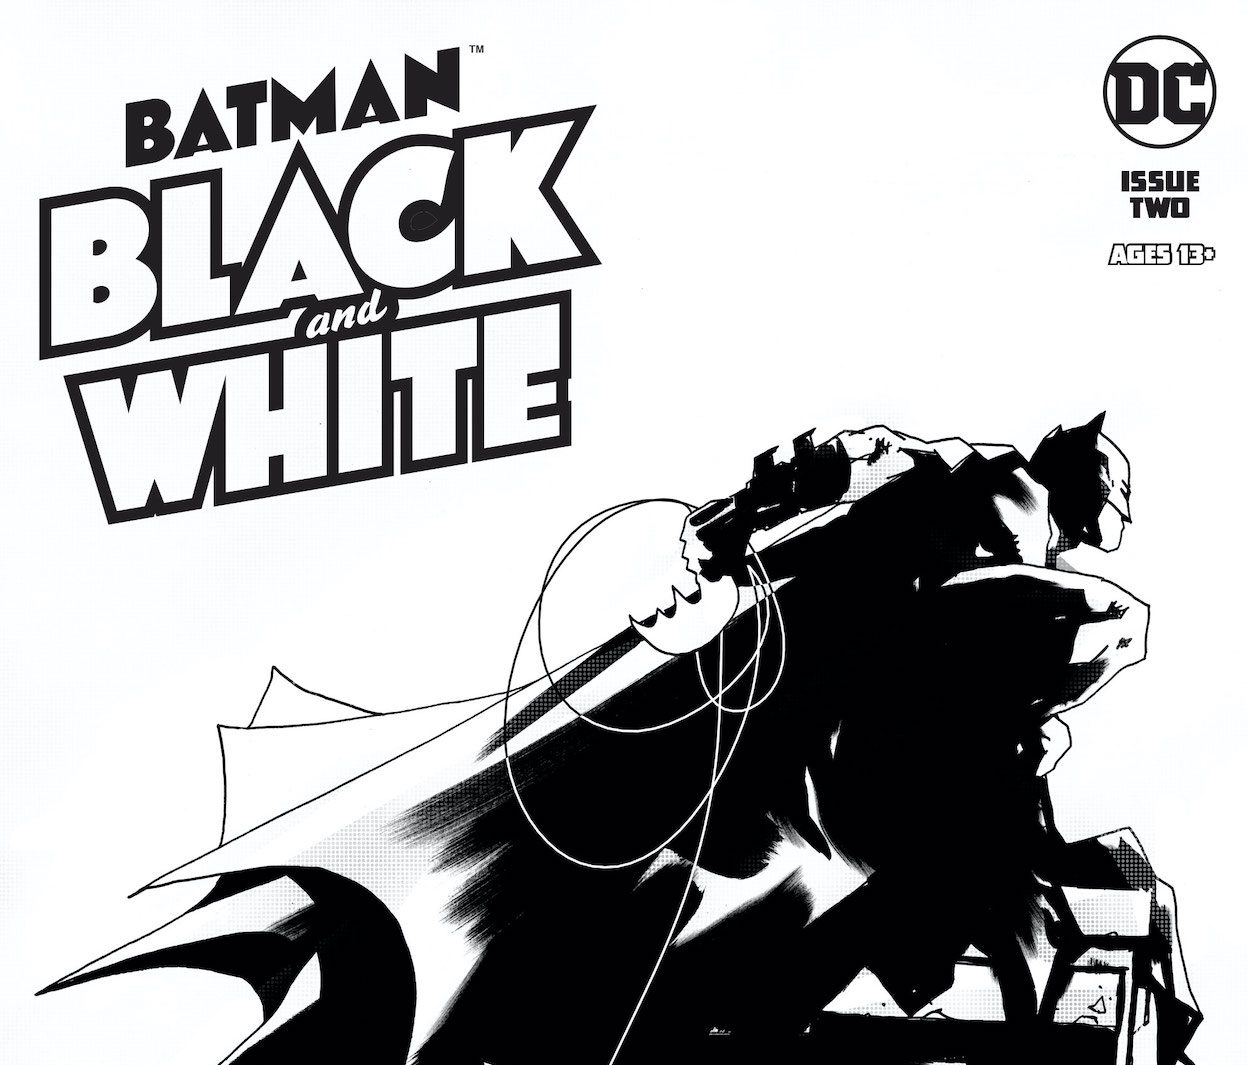 Batman Black and White #2